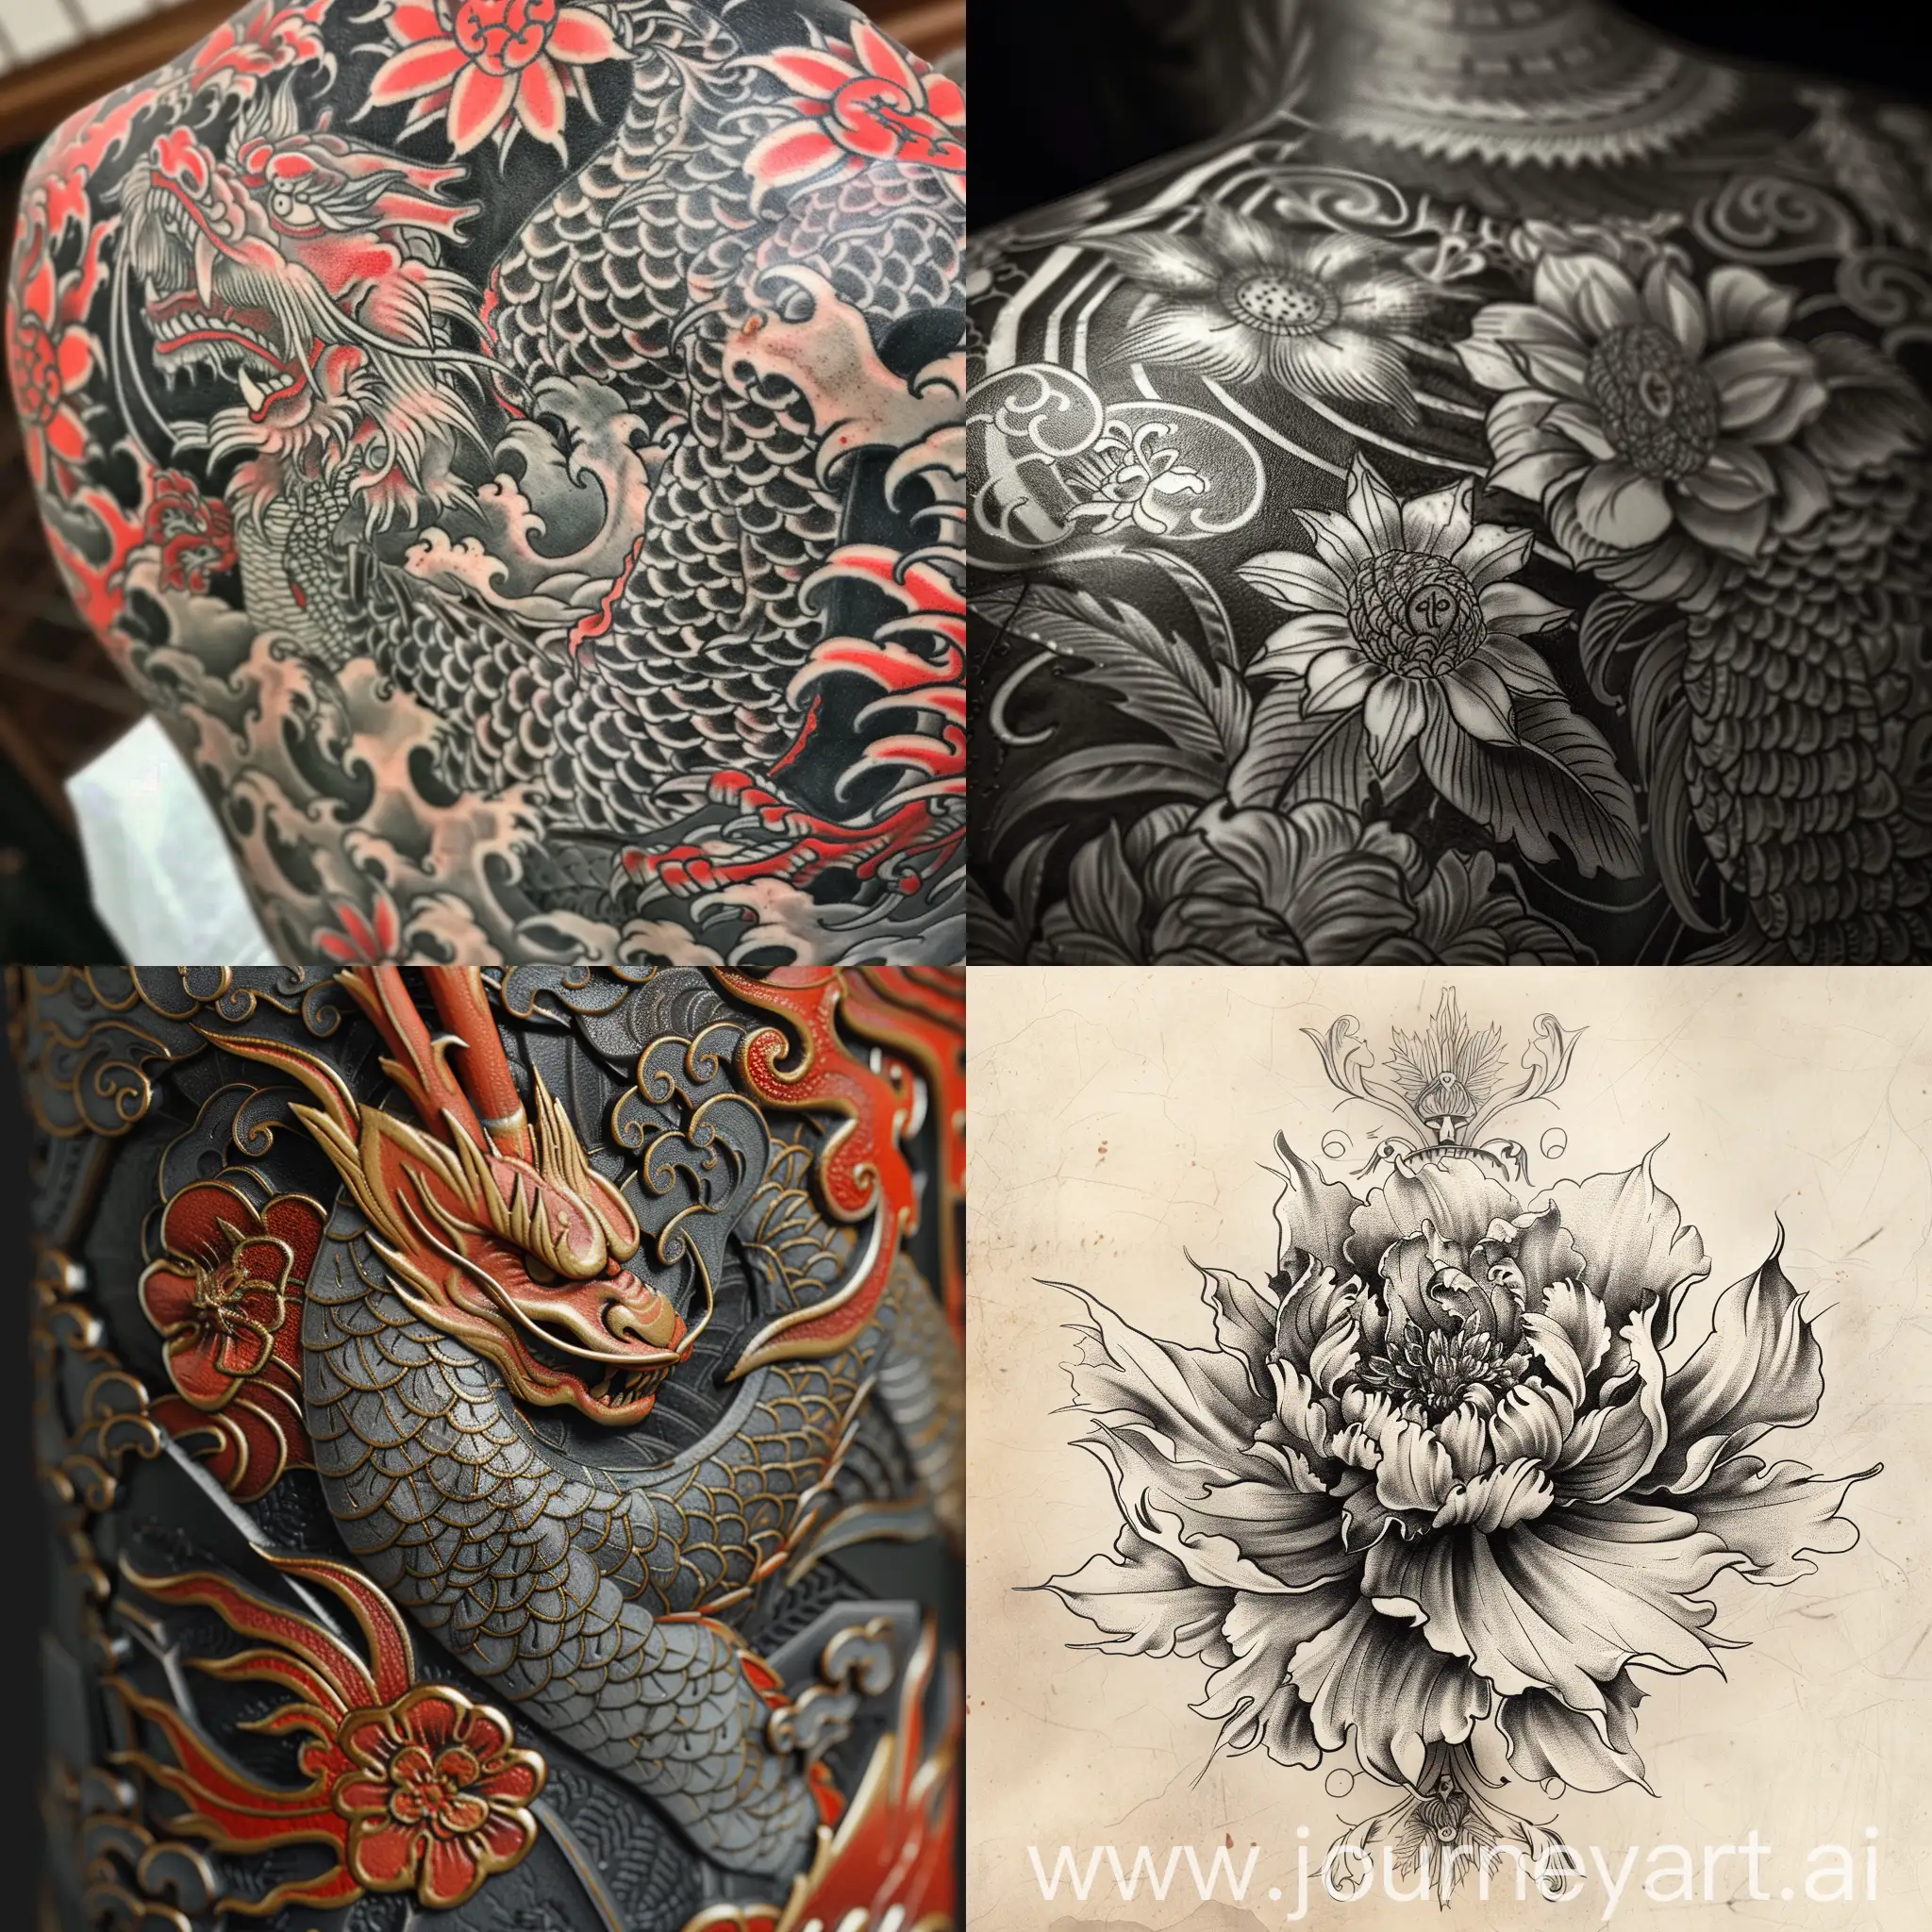 Innovative tattoo texture in 2d, high dettail
